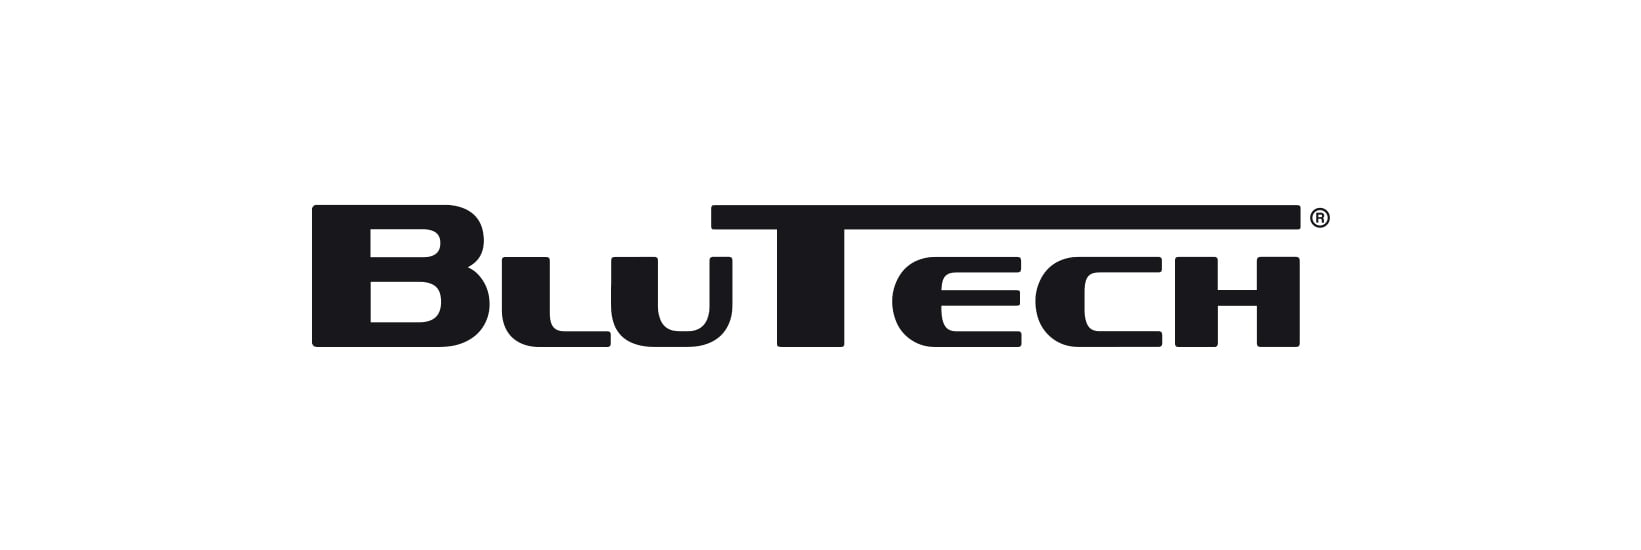 Blu Tech Lenses logo image